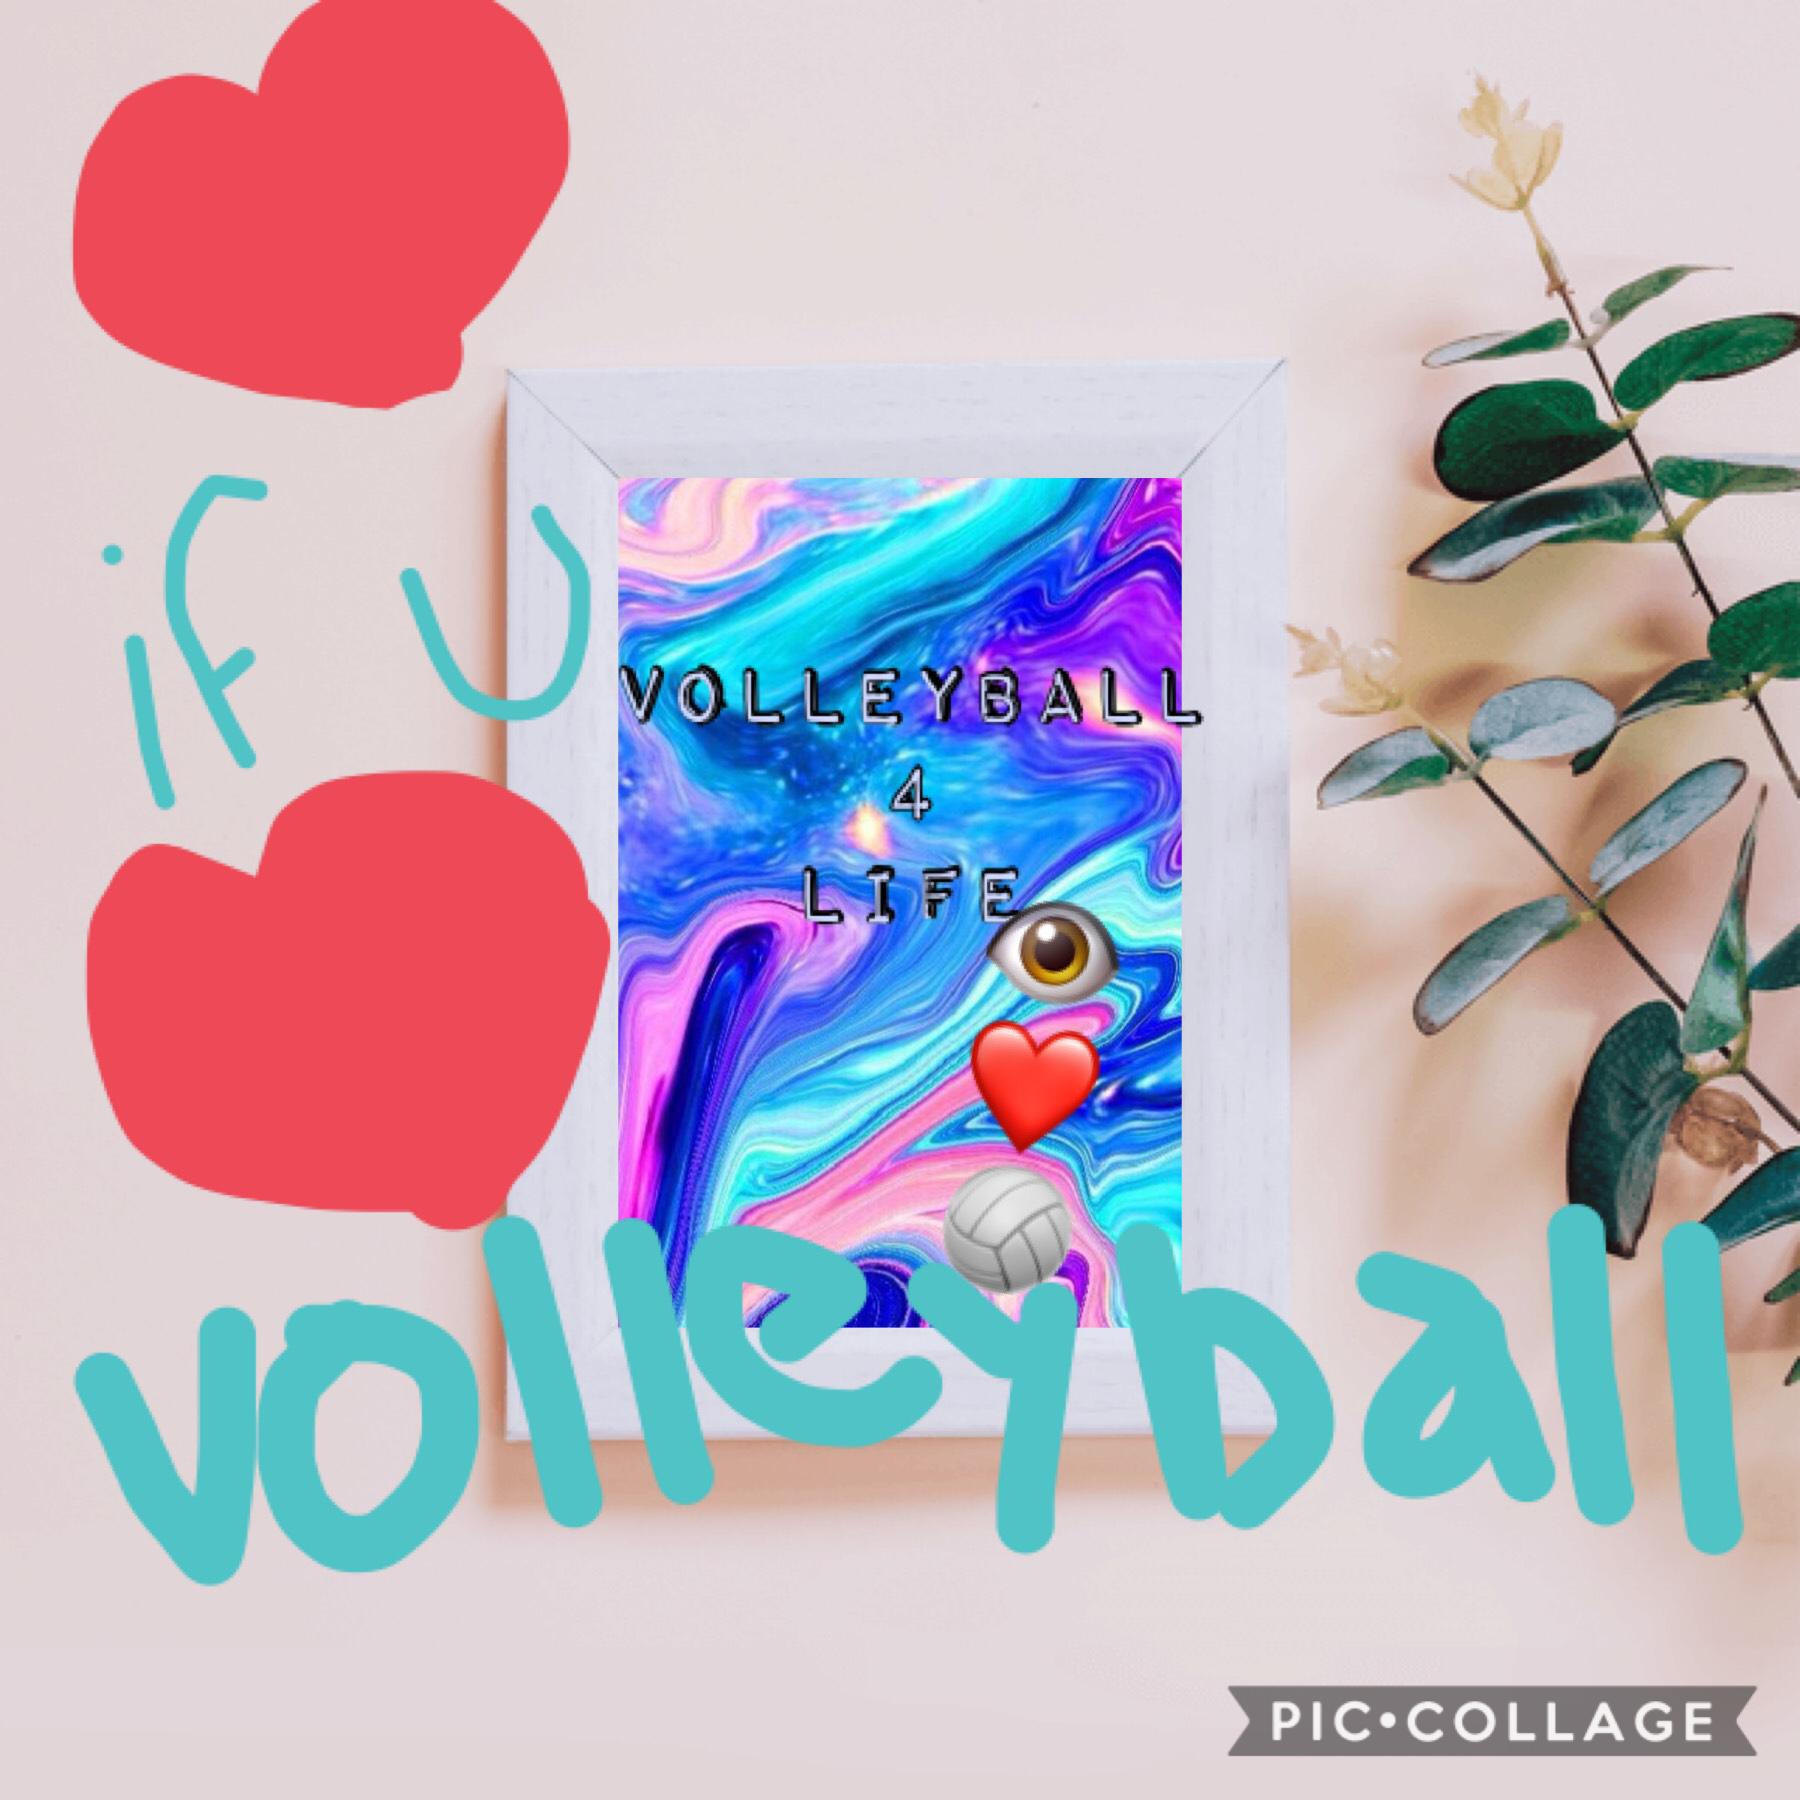 ❤️ is u like/ play volleyball